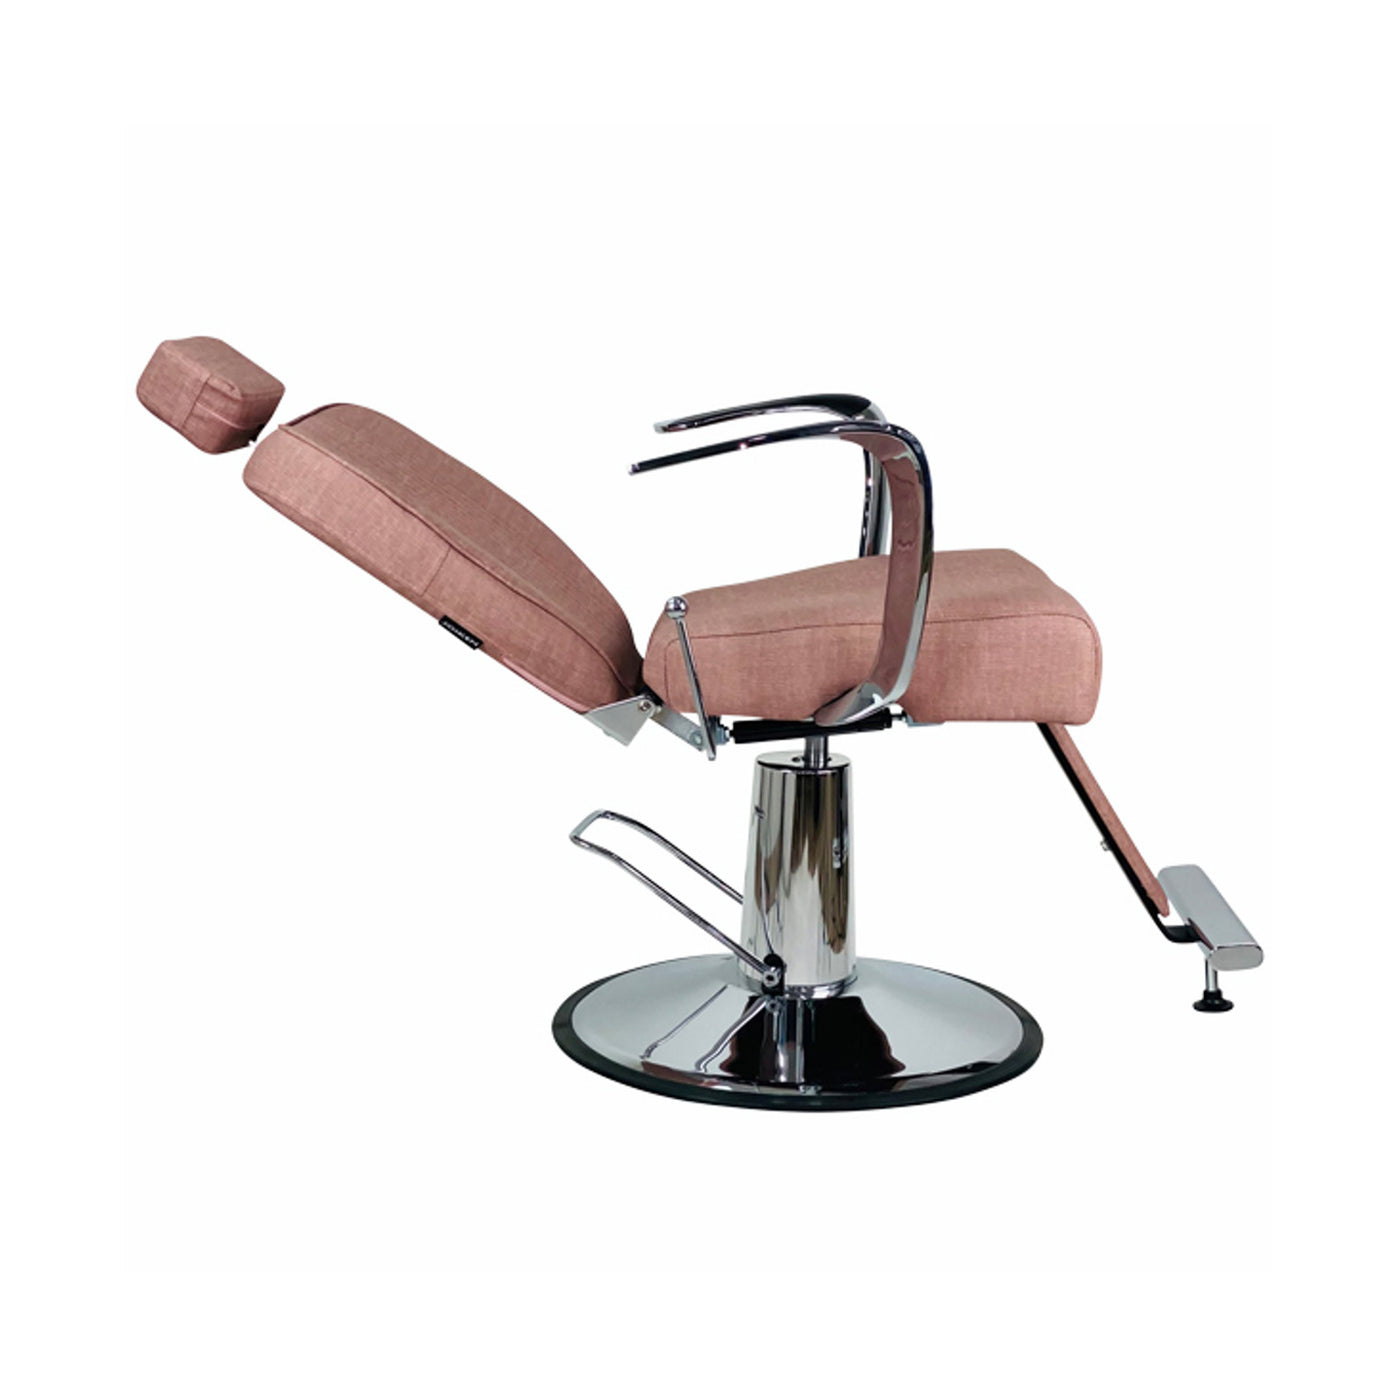 Joiken Titan Reclining Brow & Styling Chair - Dusty Pink reclined